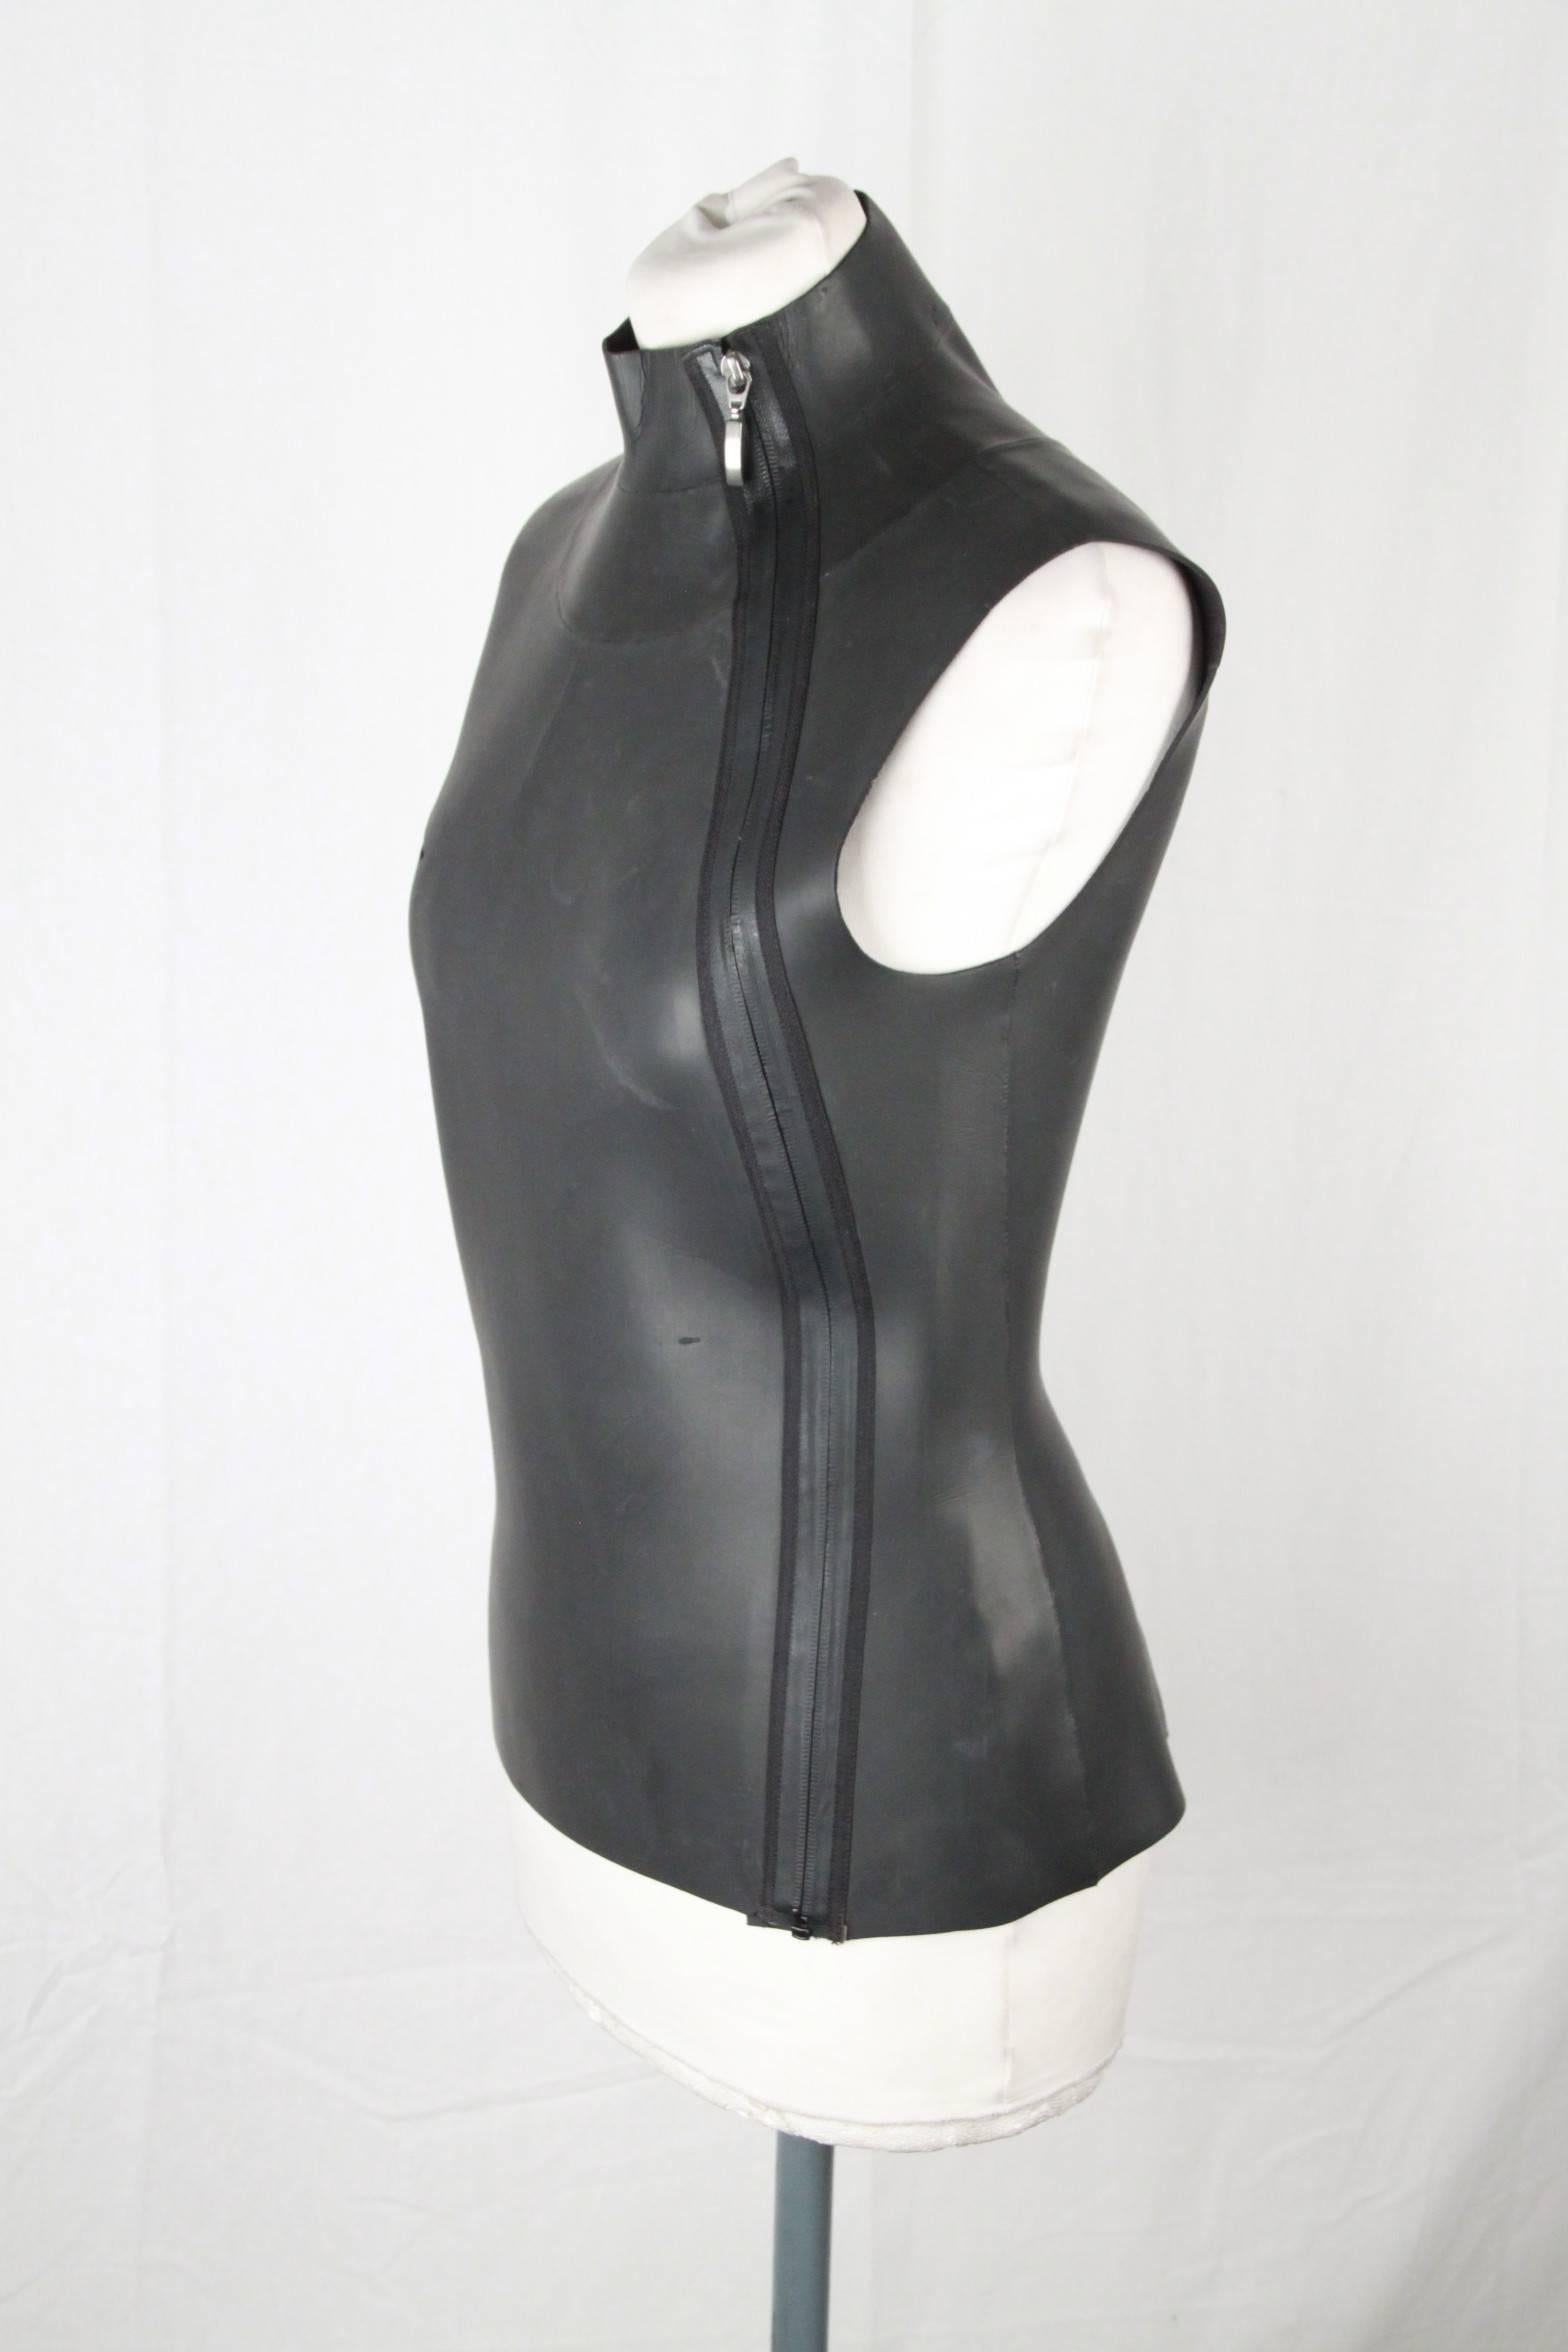 Jean Paul Gaultier Black Neoprene Vest Sleeveless Top Size 42 2